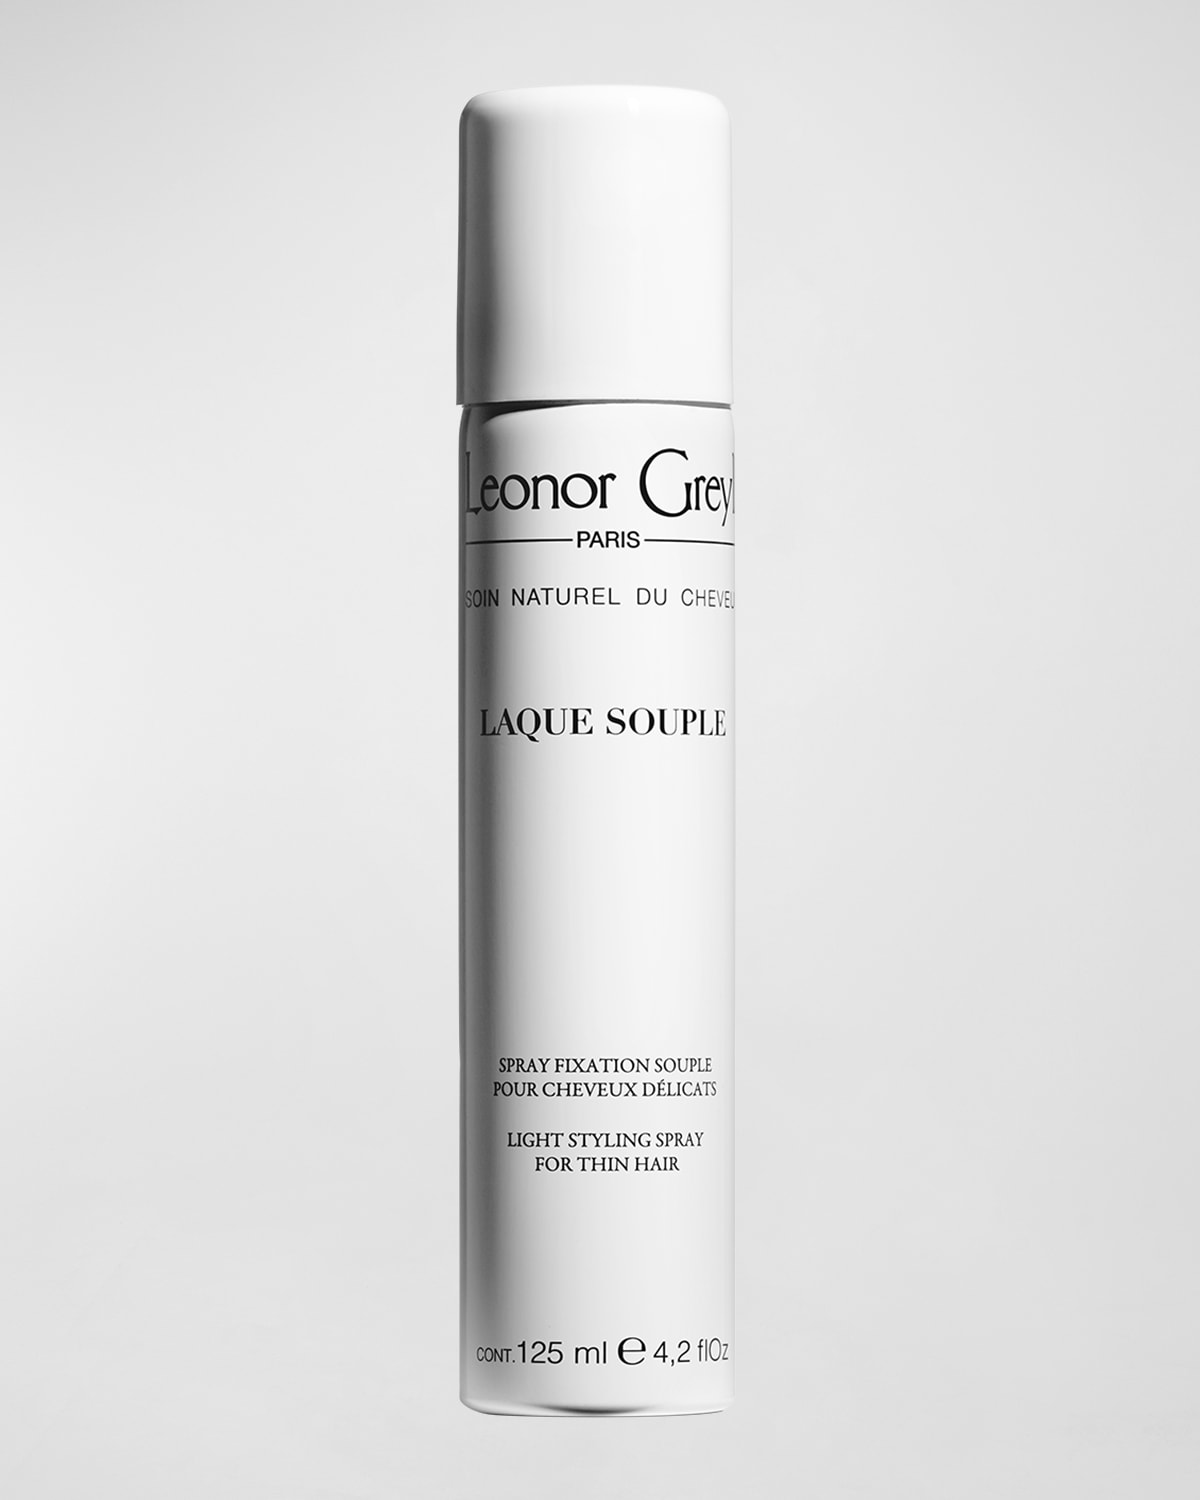 Leonor Greyl Laque Souple (Light Styling Spray for Thin Hair), 1.7 oz./ 50 mL